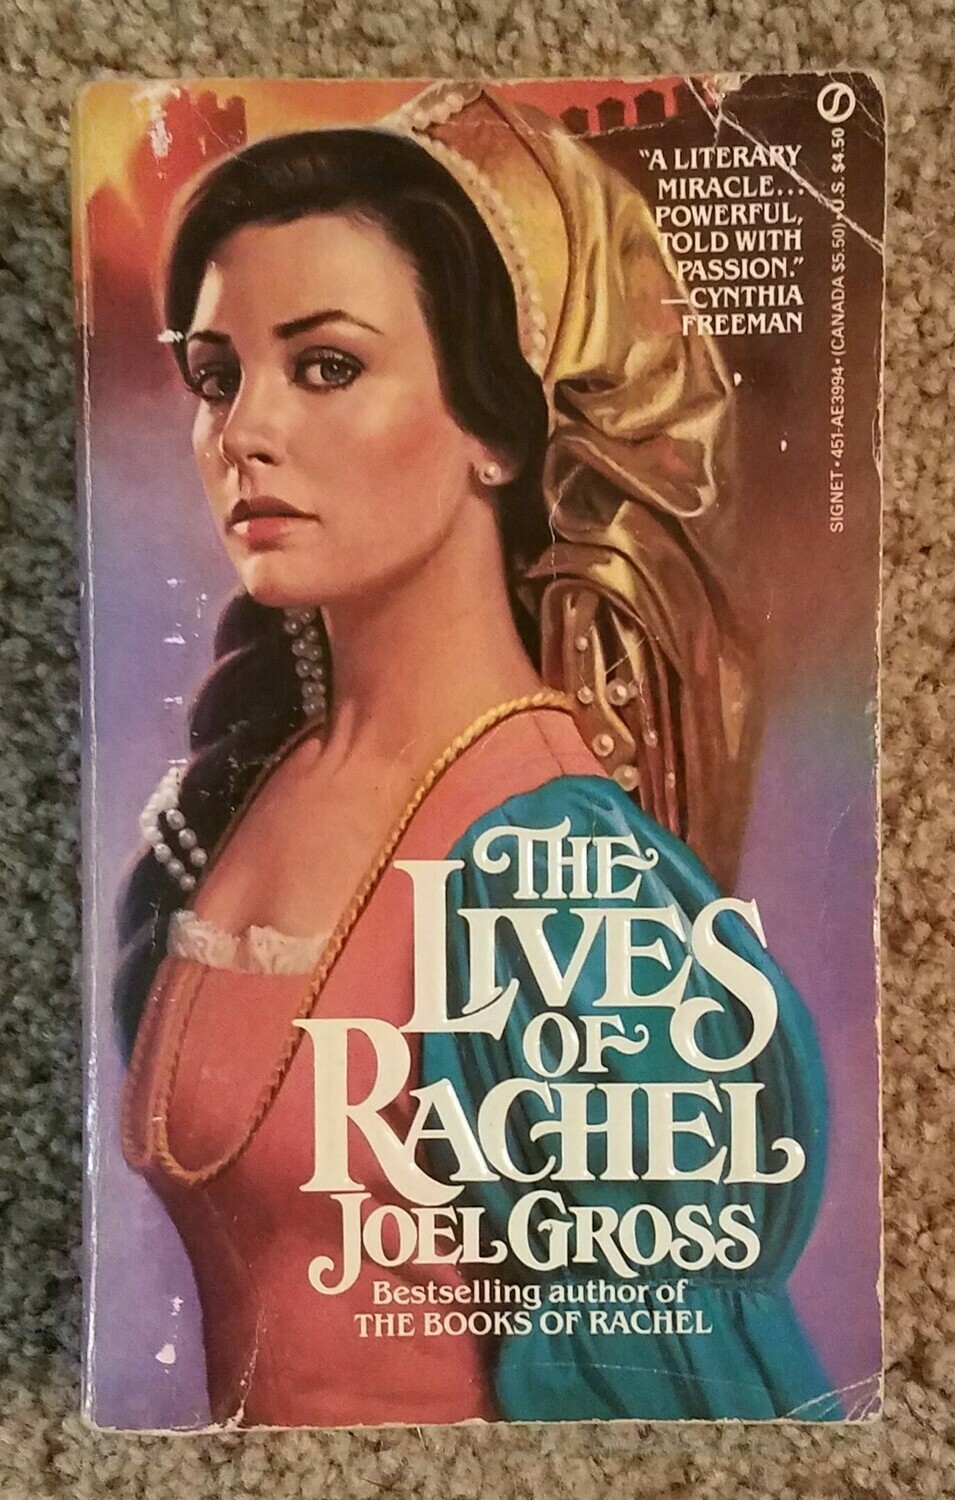 The Lives of Rachel by Joel Gross